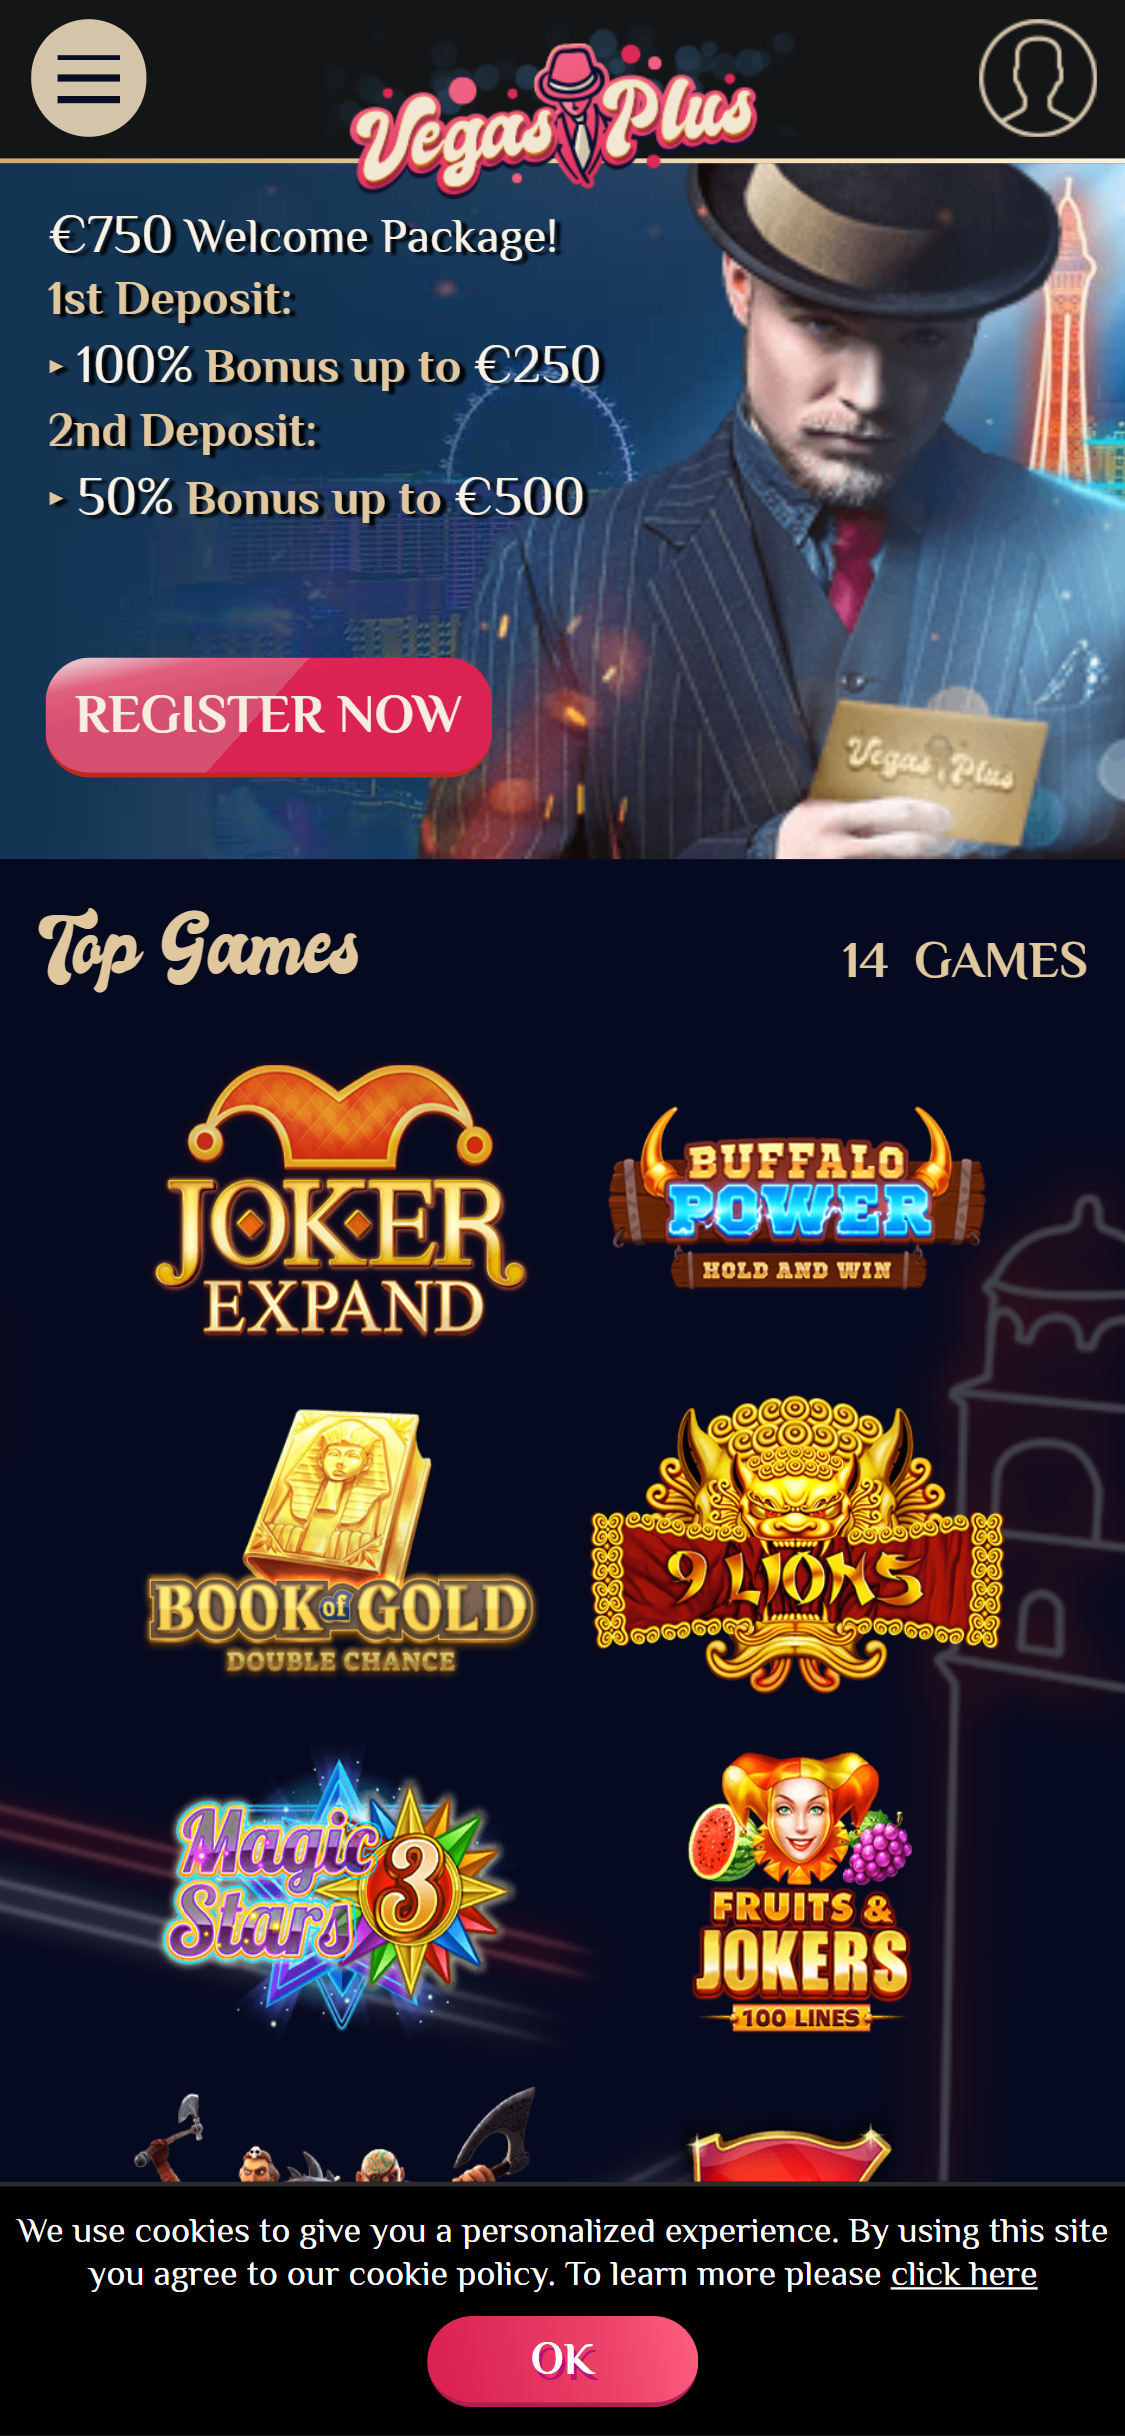 VegasPlus Casino Mobile Review